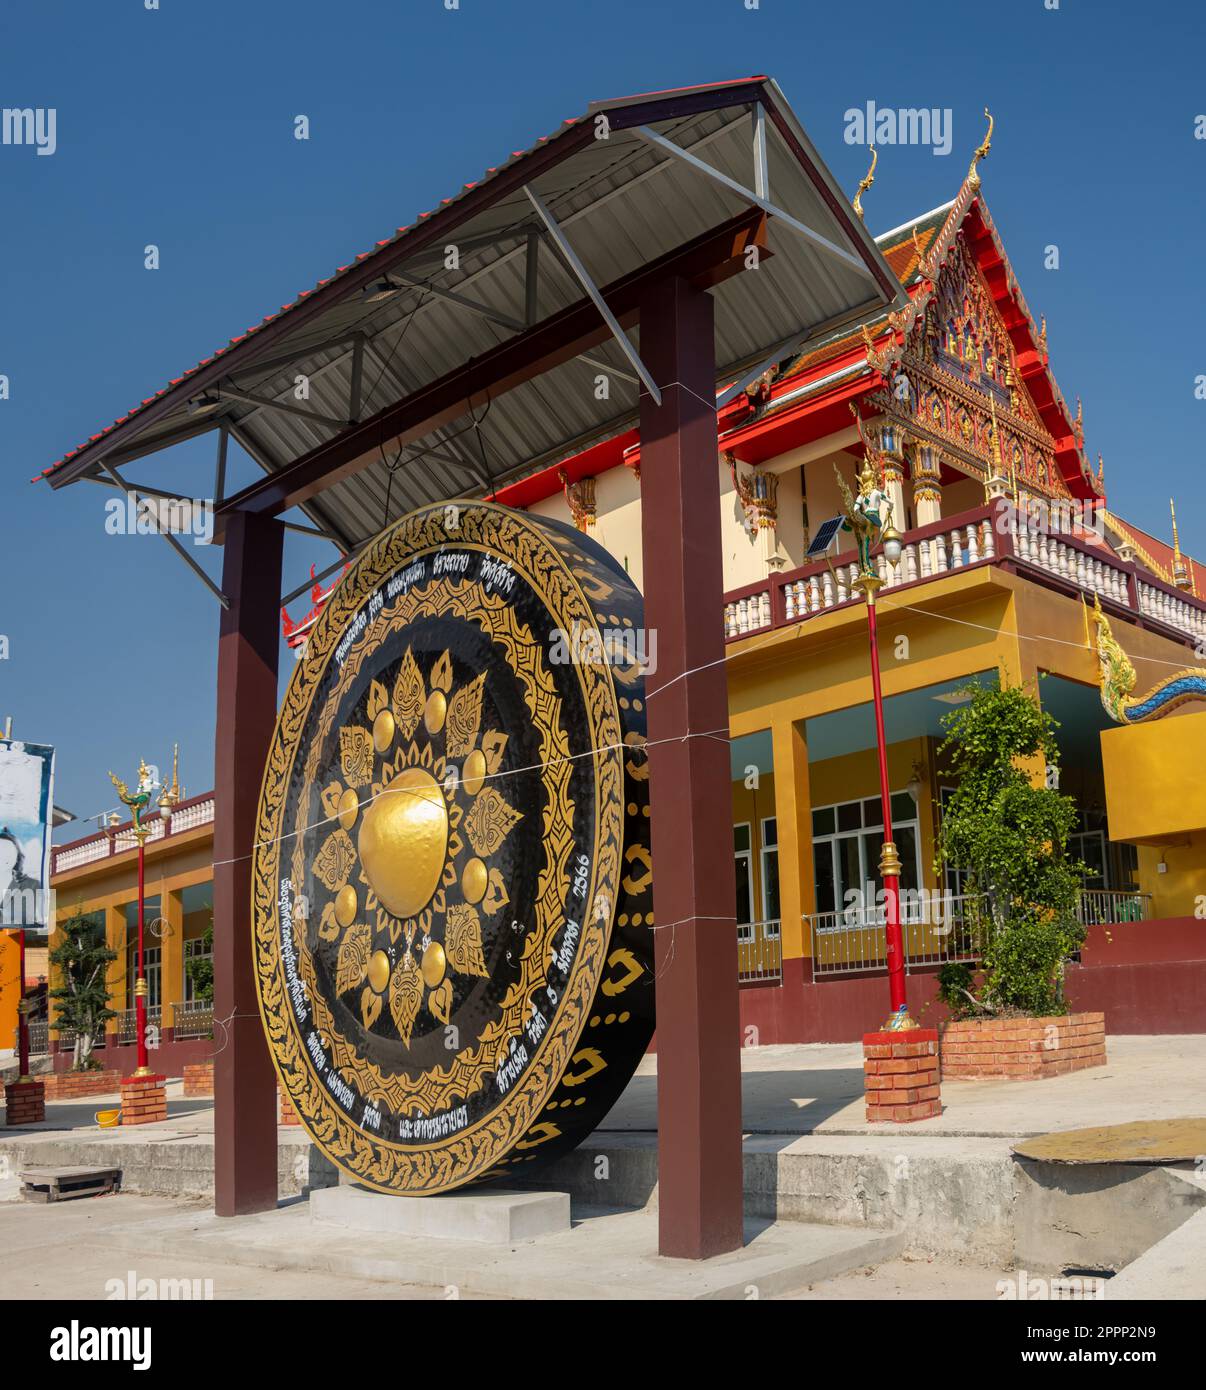 Gong - Tibet Village Gallery